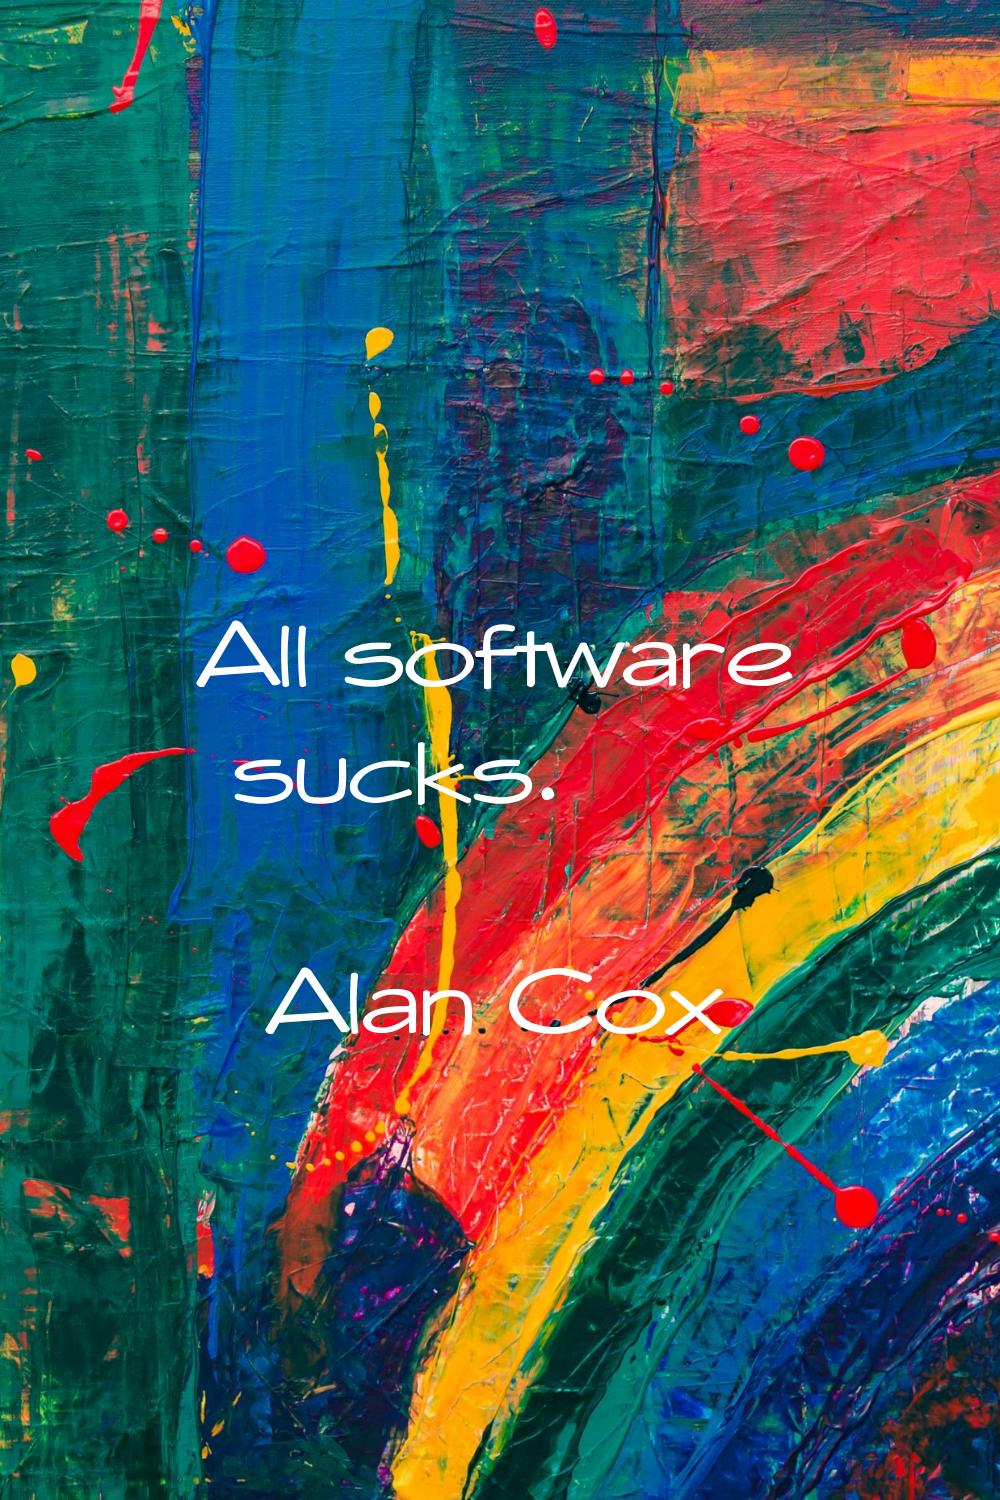 All software sucks.